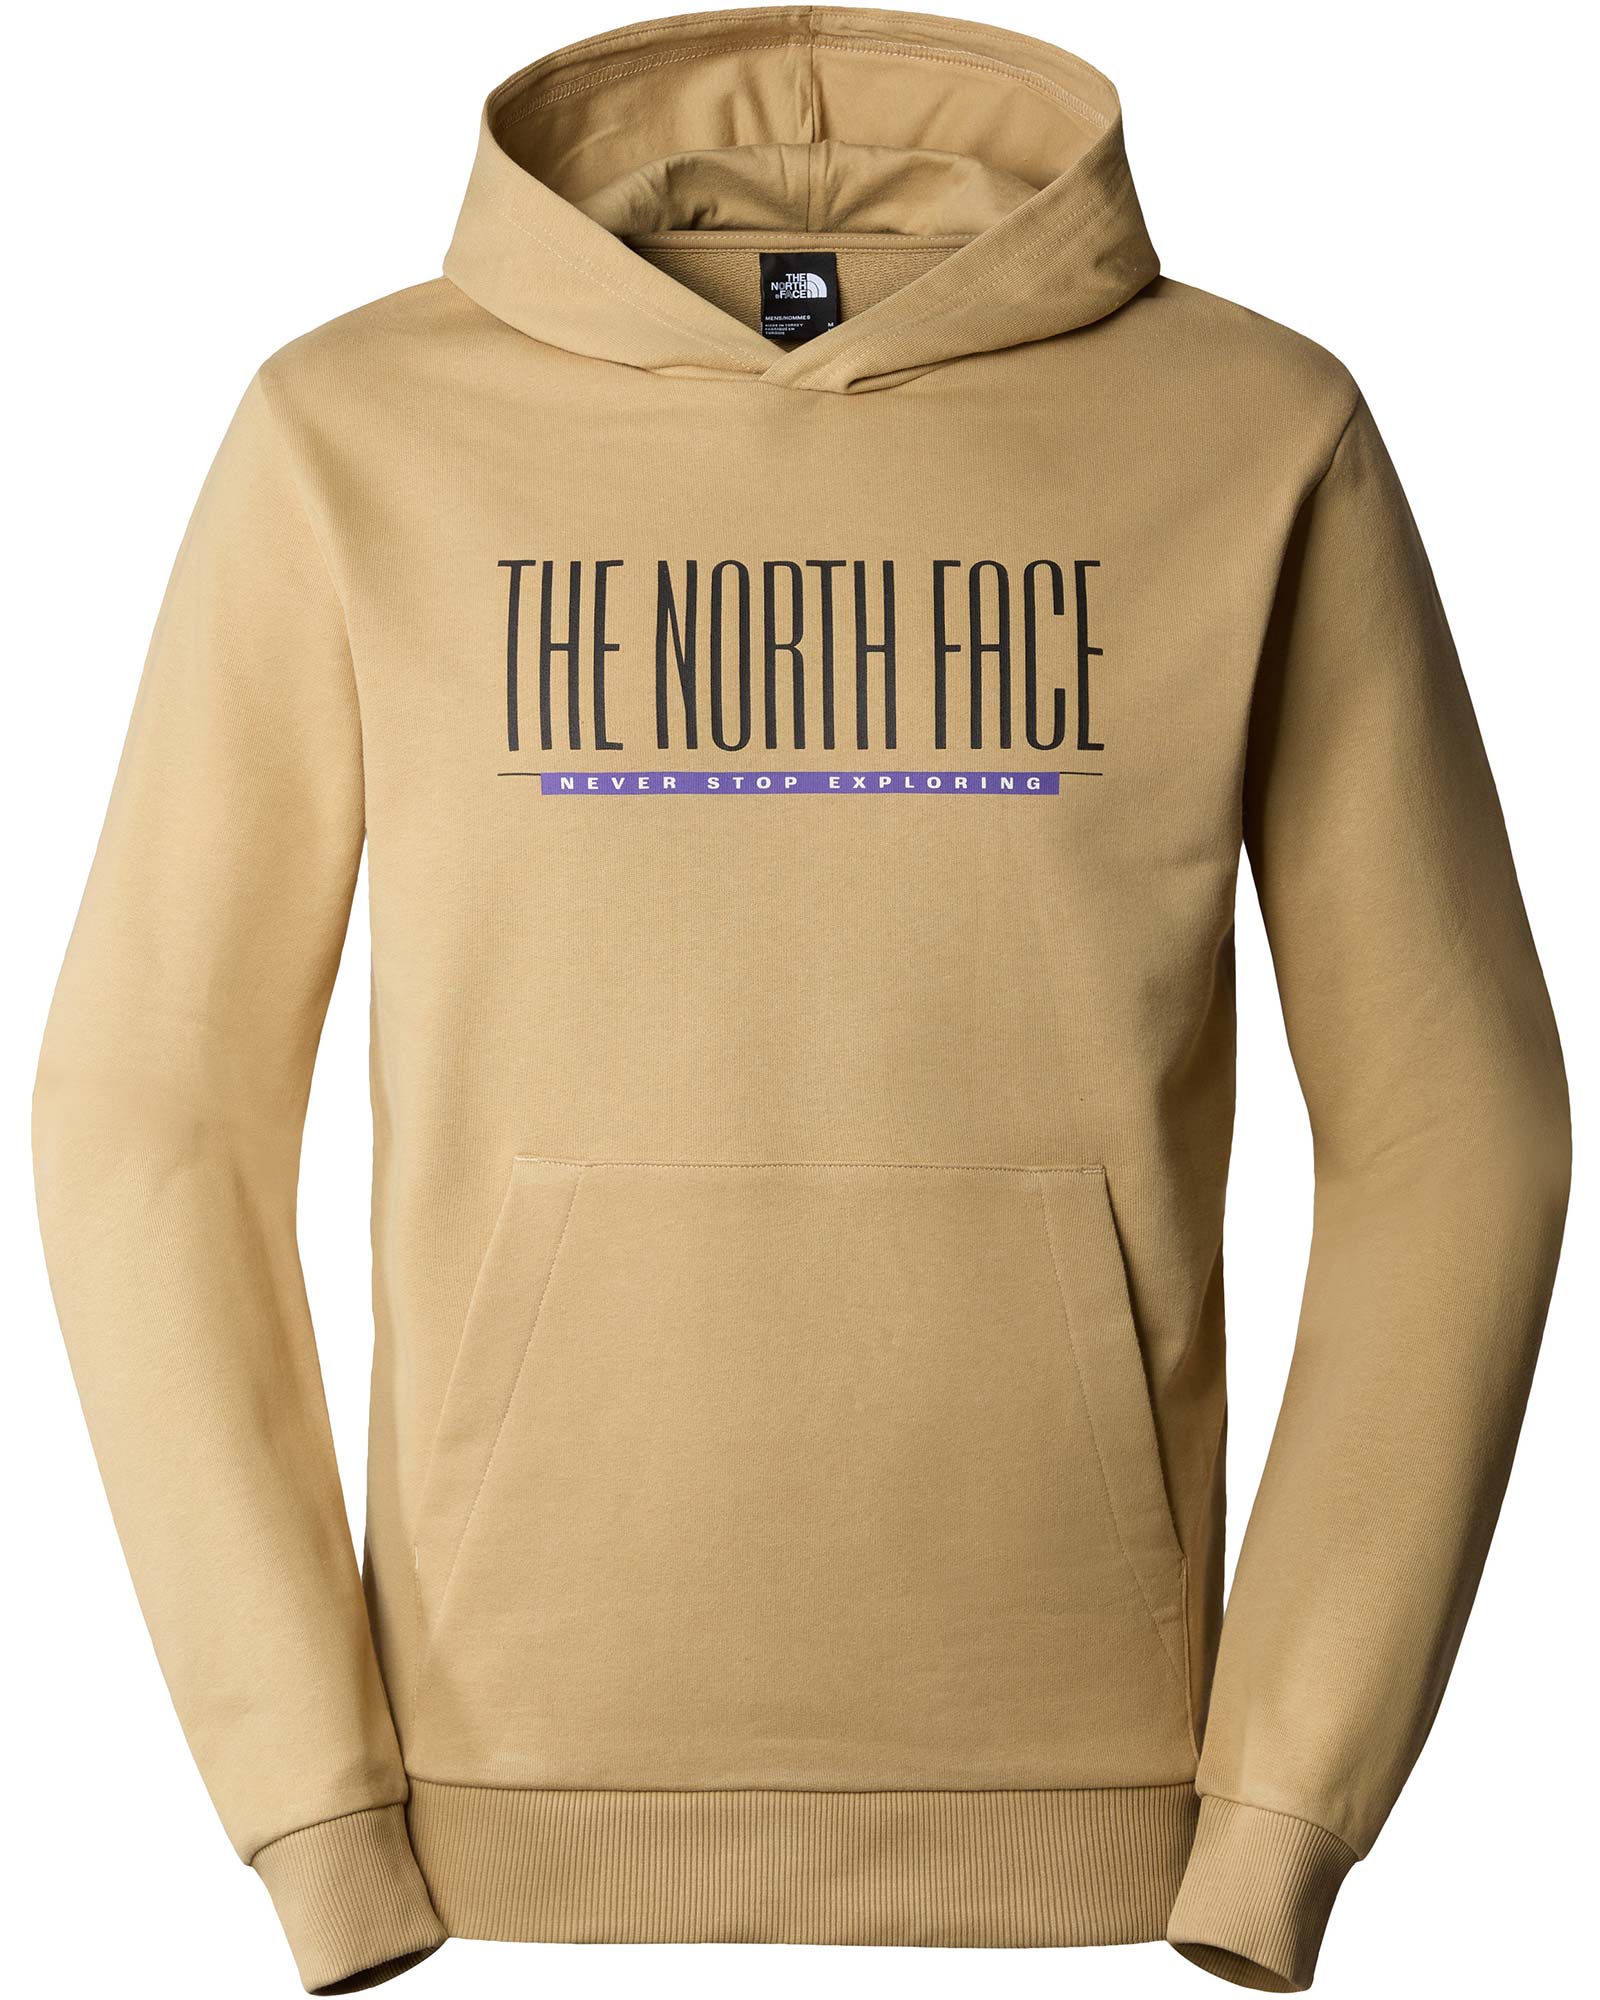 The North Face Men's TNF Est 1966 Hoodie